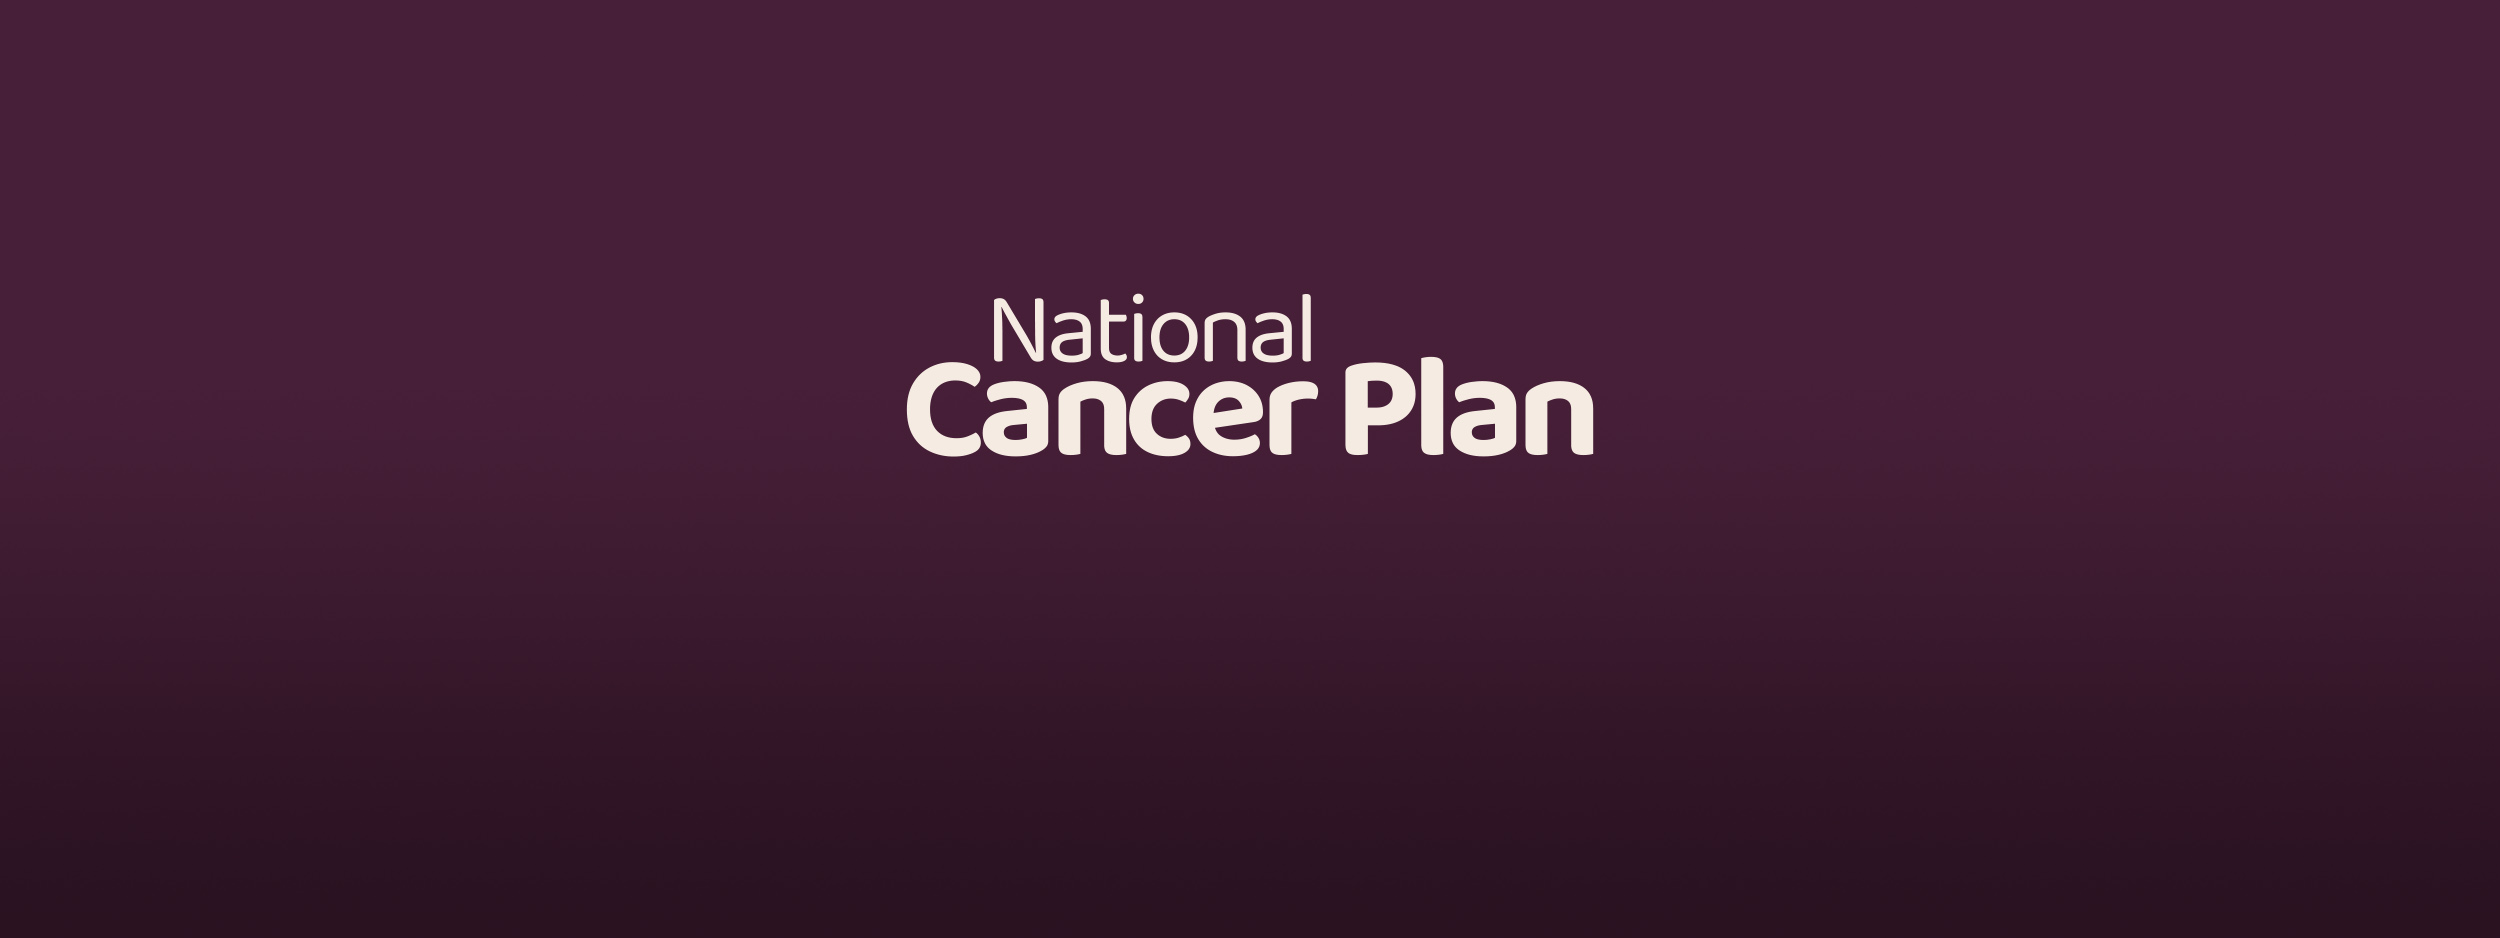 An image displaying the National Cancer Plan name